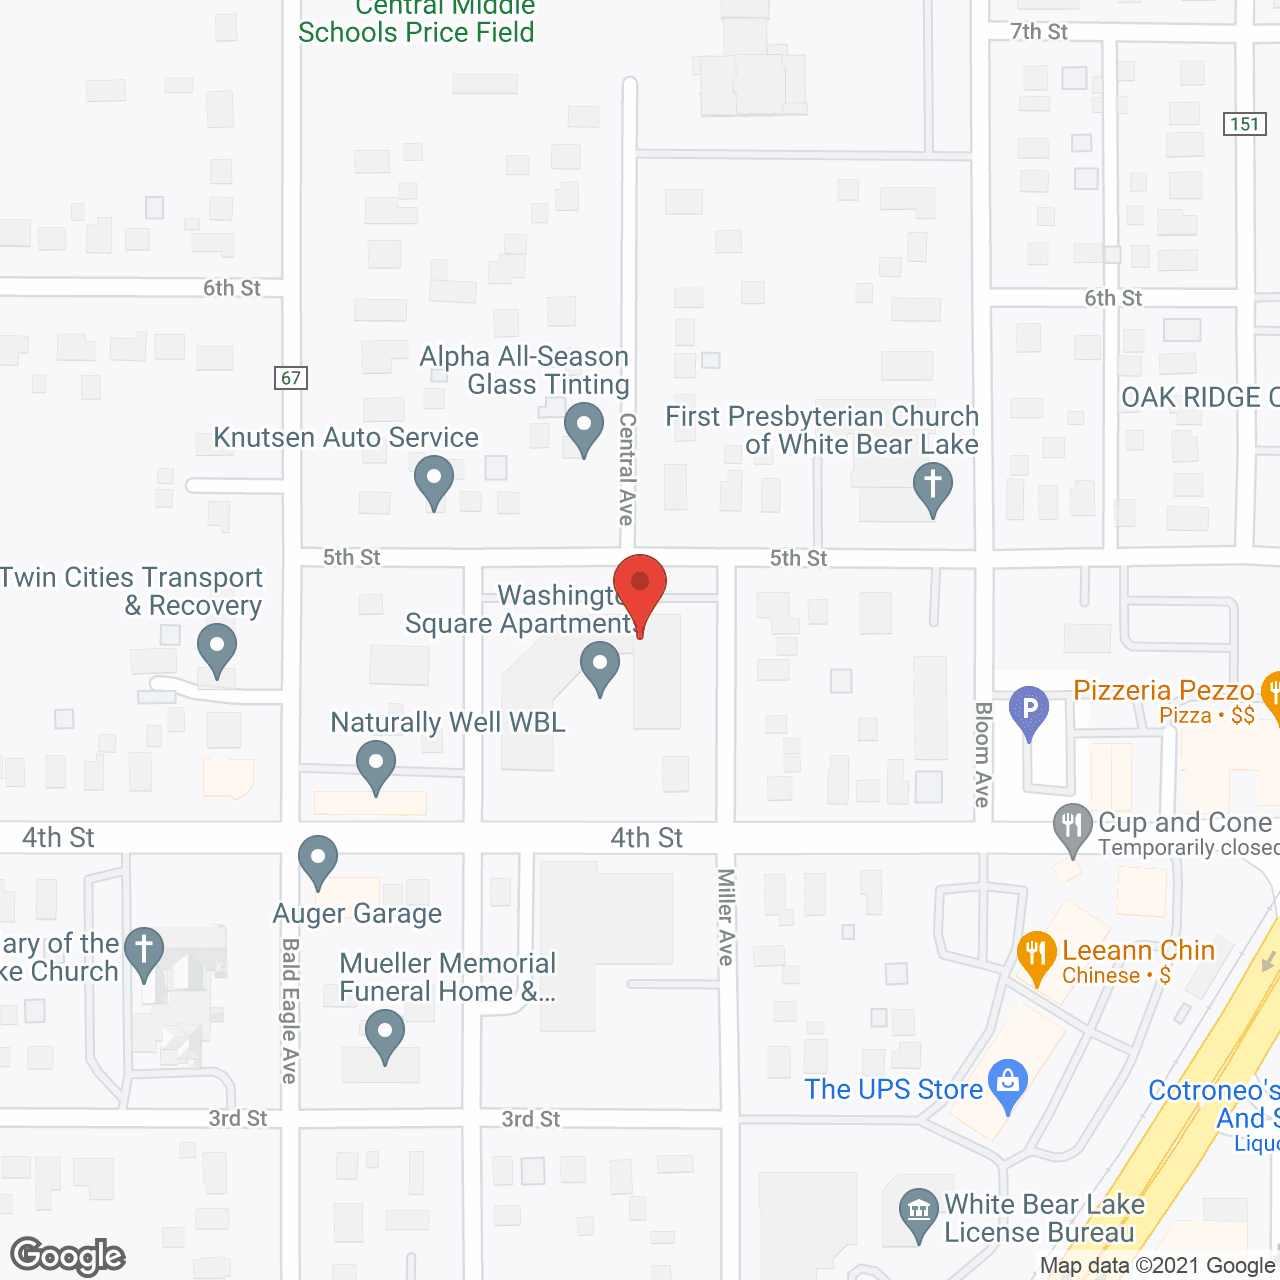 Washington Square Apartments in google map